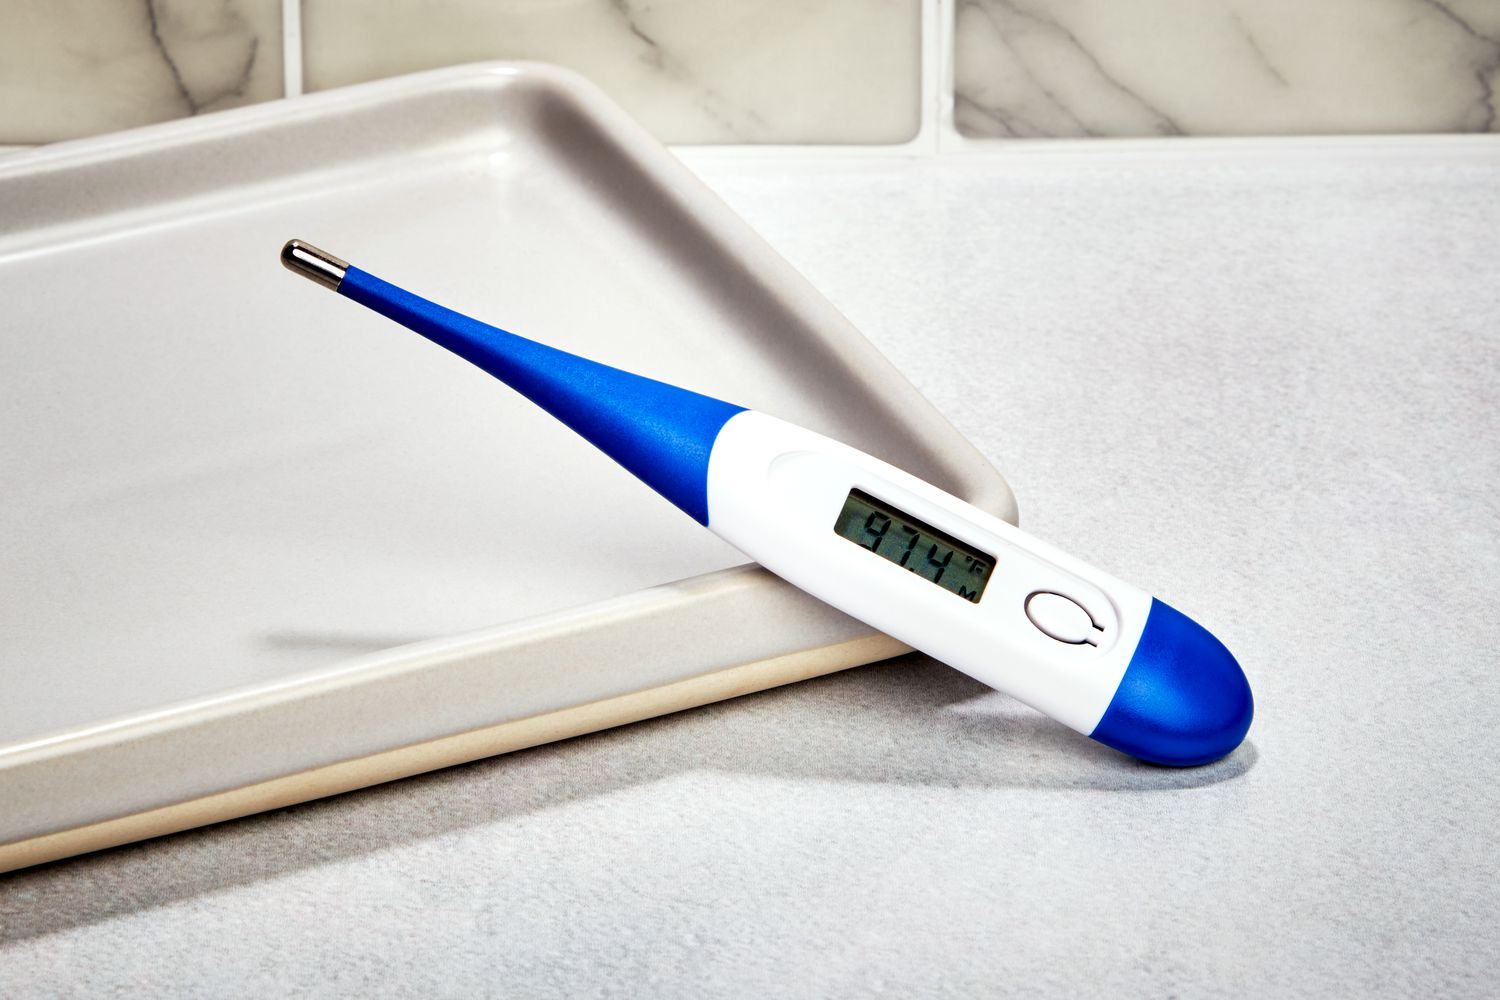 Boncare Digital Oral Thermometer